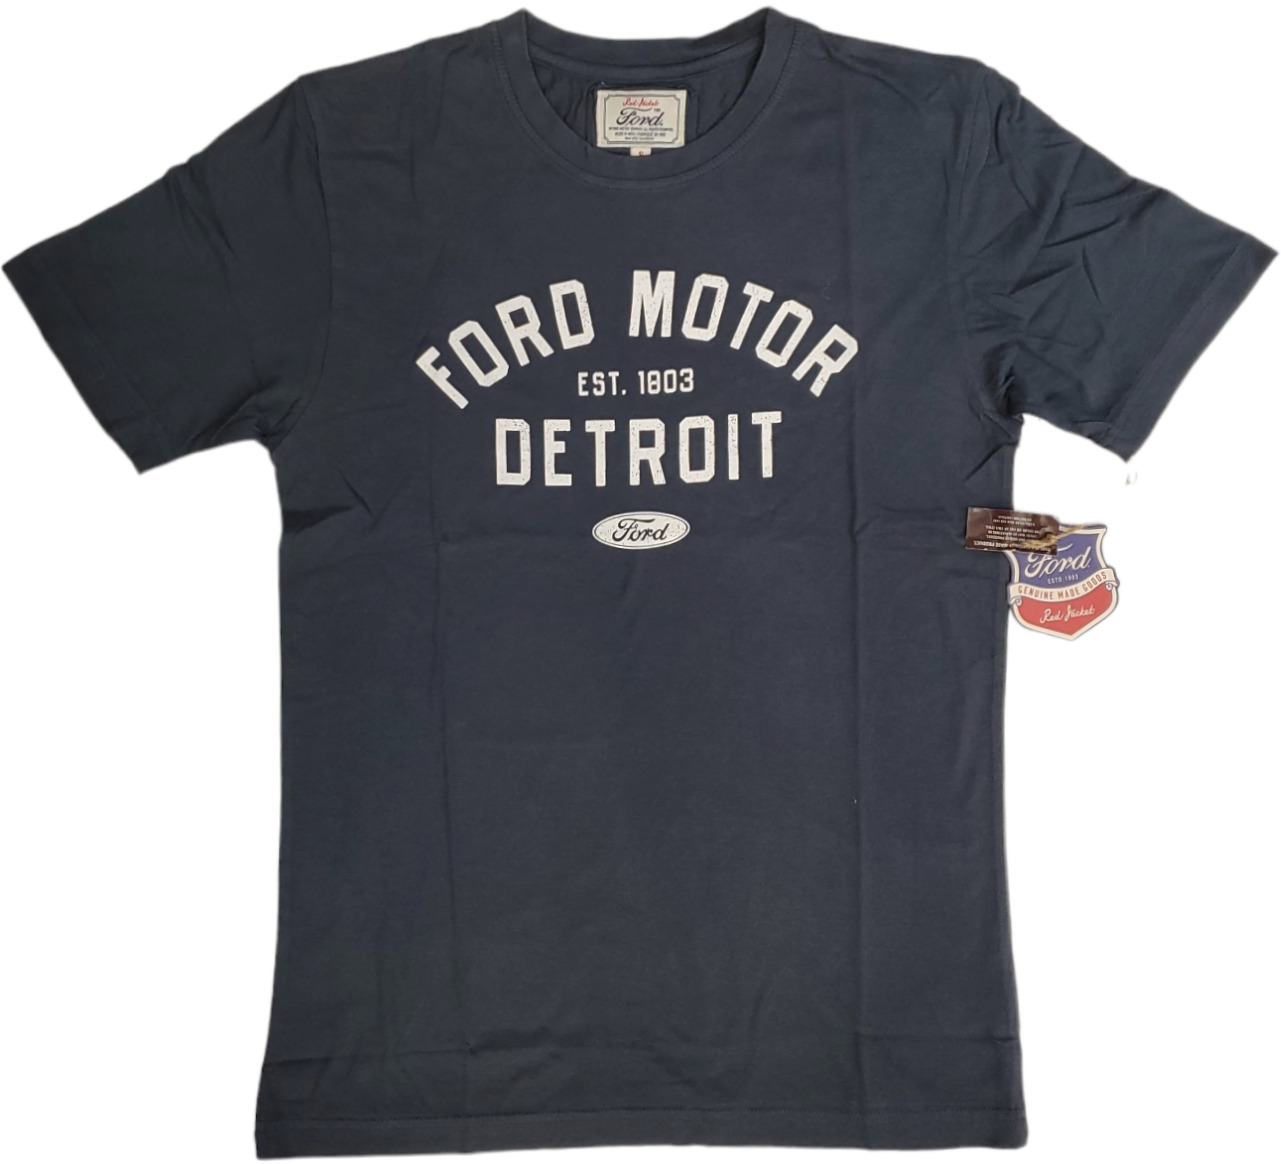 Ford Motor Detroit Est. 1803 T-Shirt